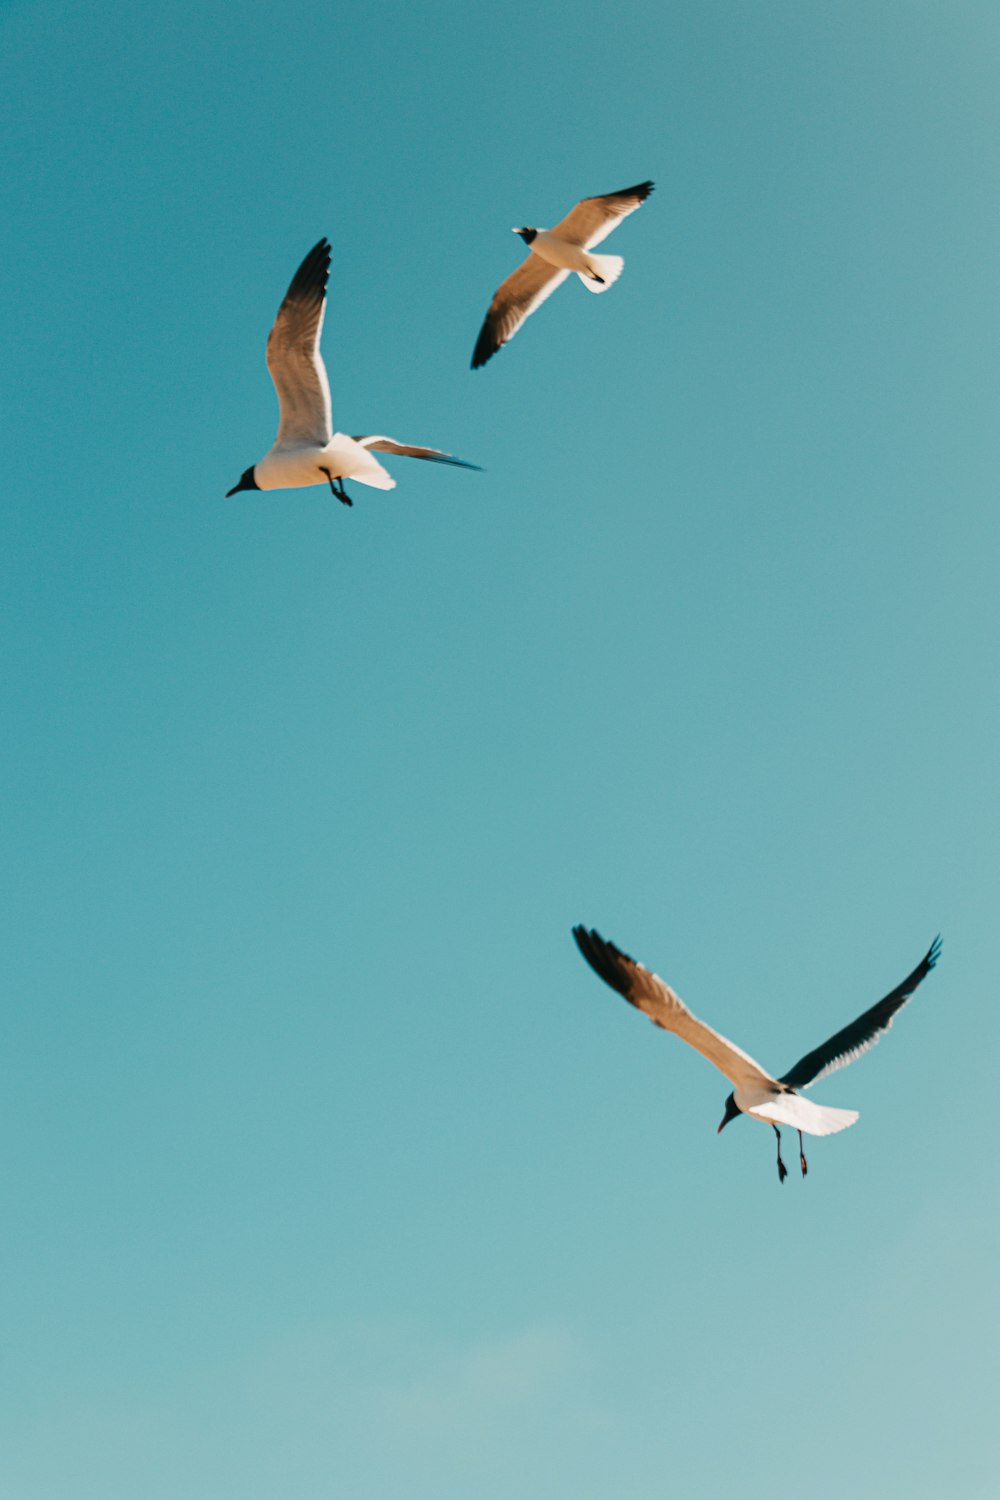 white and black birds flying under blue sky during daytime